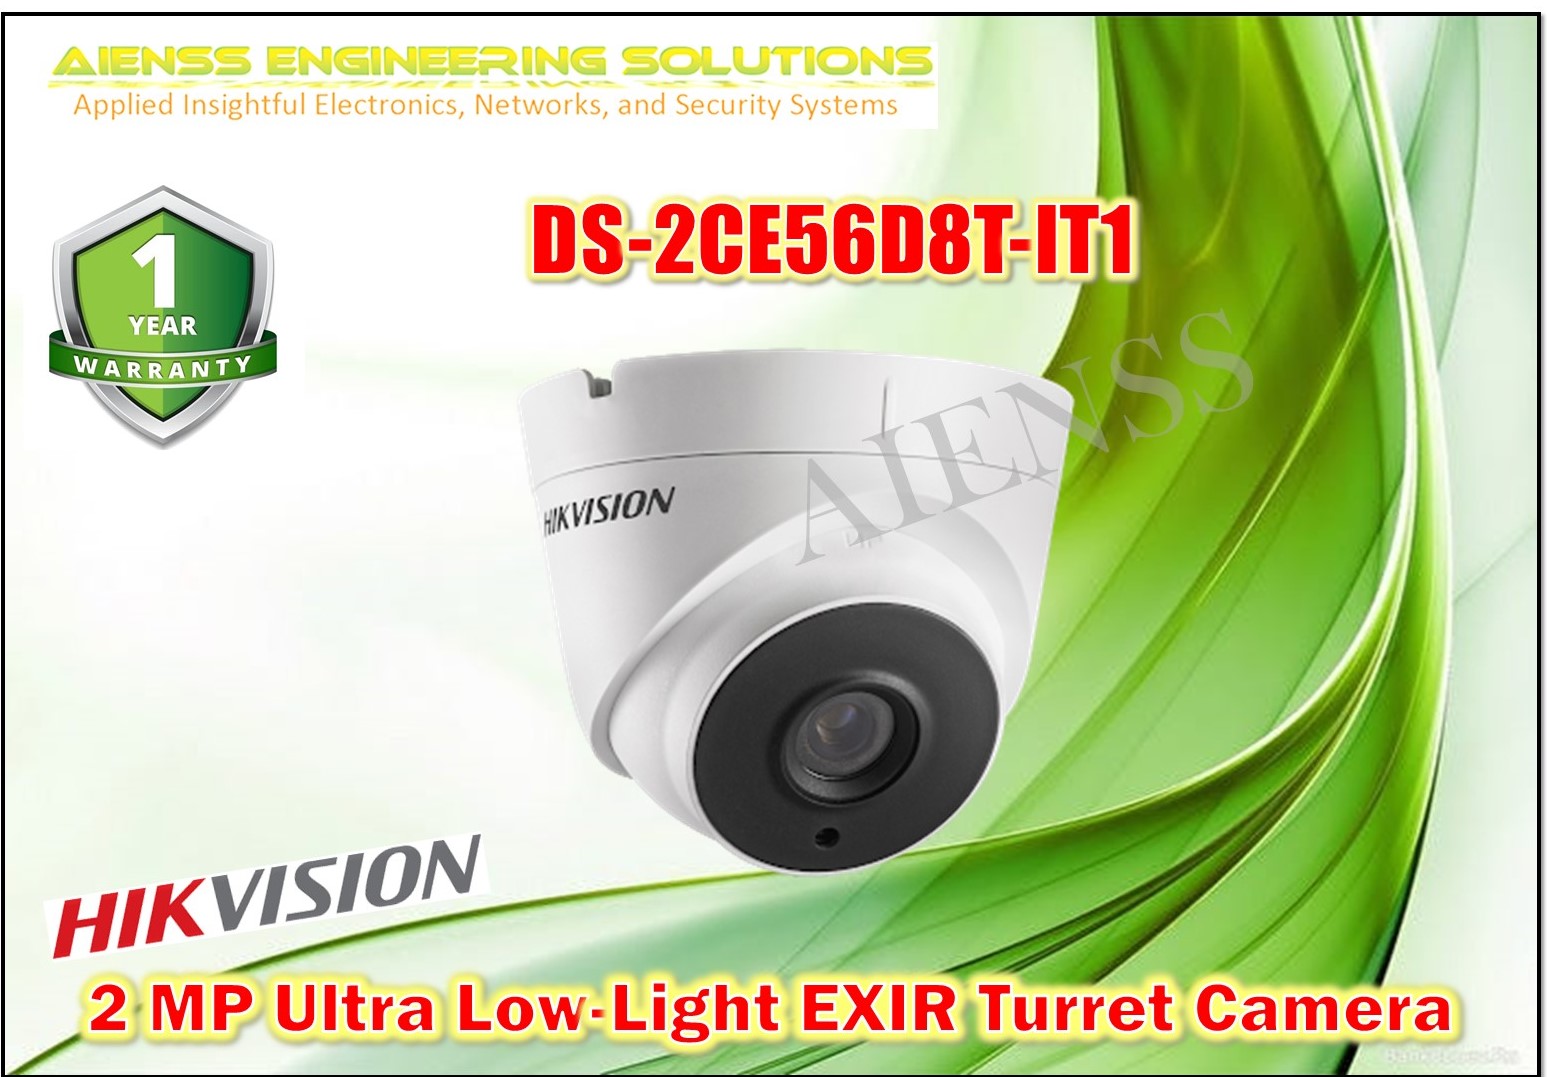 DS-2CE56D8T-IT1 HIKVISION MP Ultra Low-Light EXIR Turret Camera 20m IR  distance Lazada PH